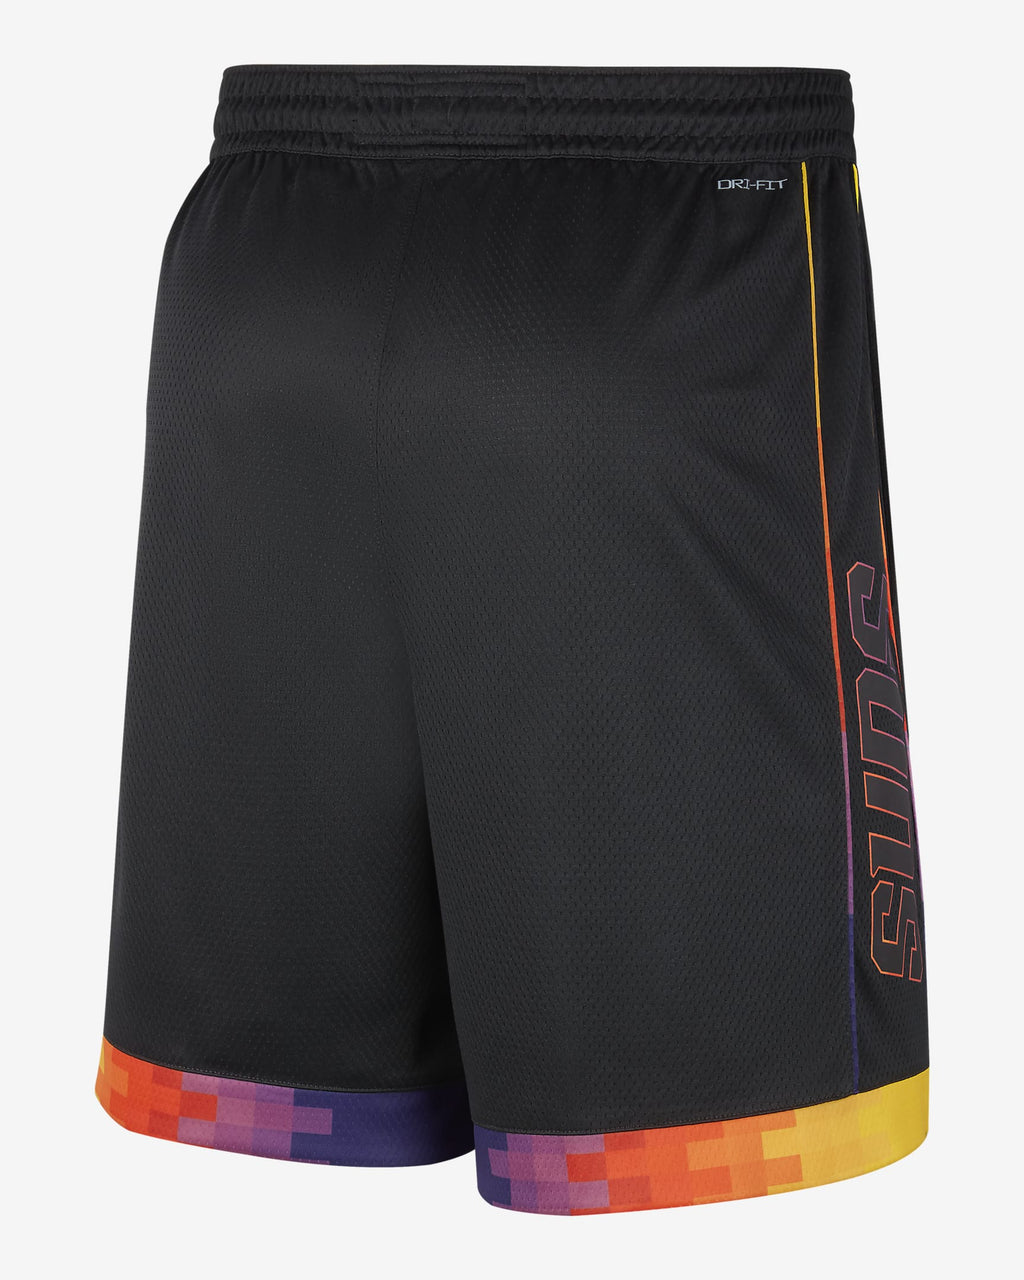 Phoenix Suns Statement Edition Men's Jordan Dri-FIT NBA Swingman Basketball Shorts 'Black/White'